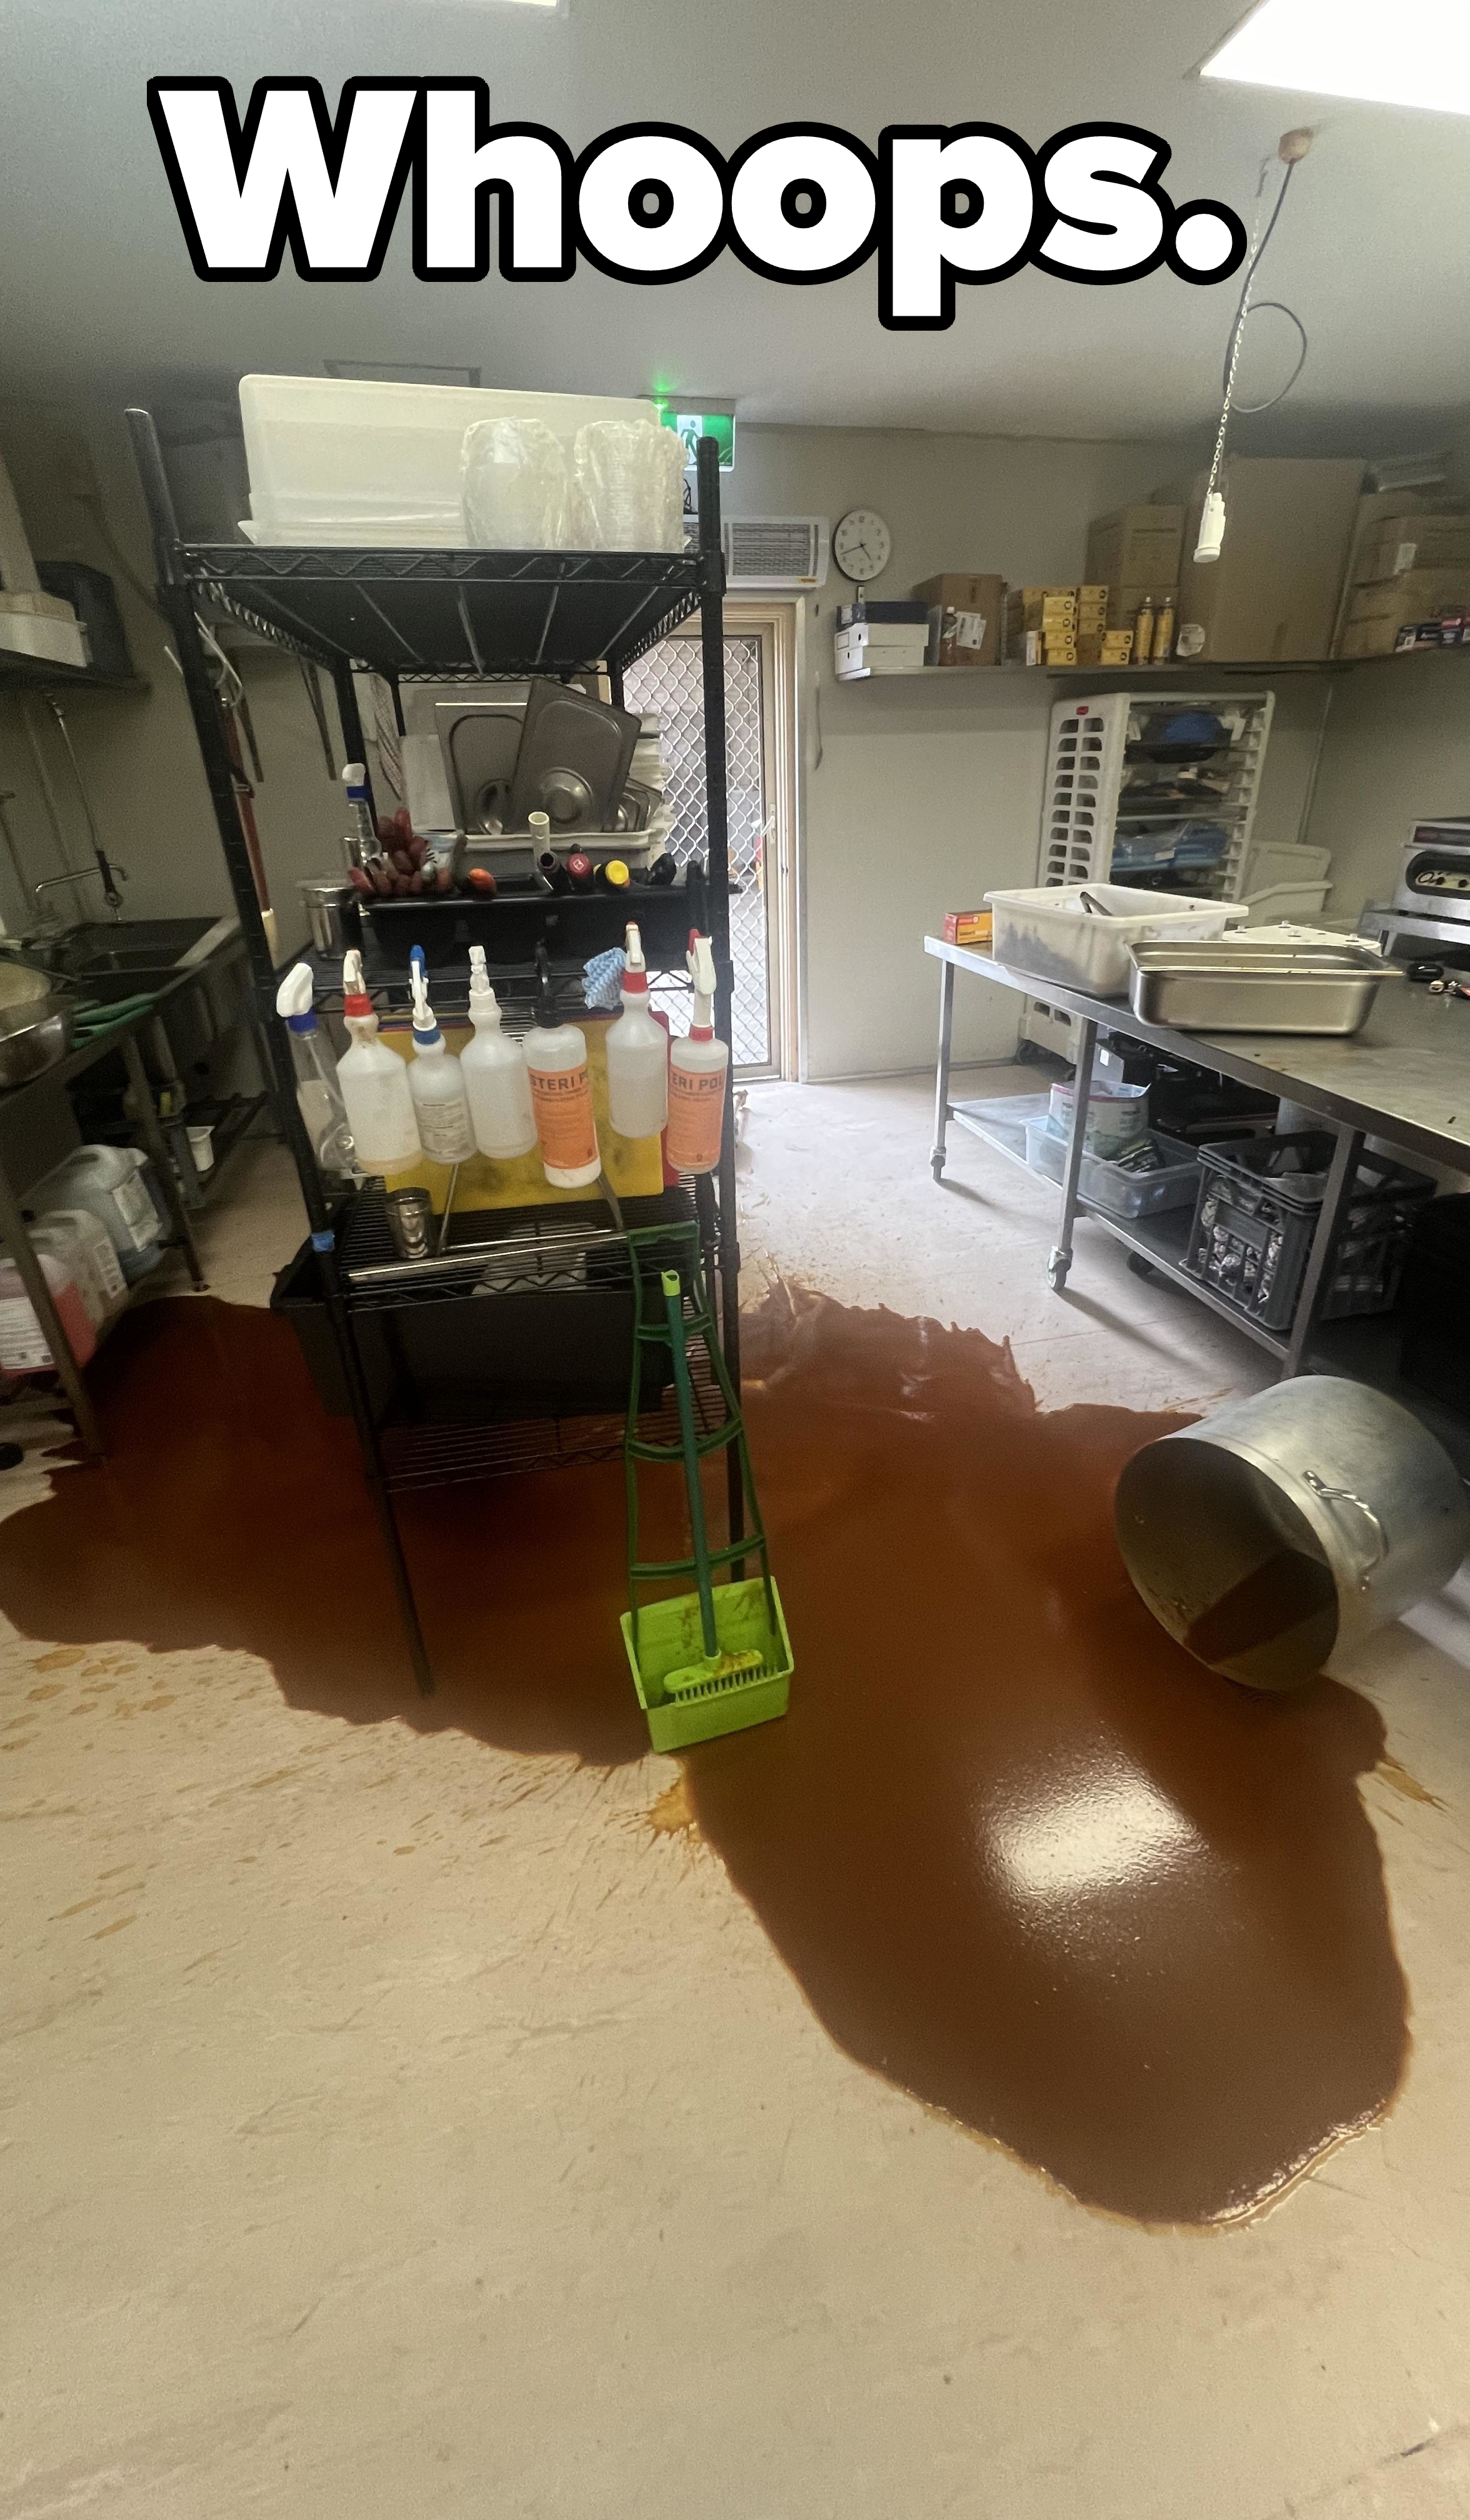 A spilled stew or sauce all over a restaurant kitchen floor